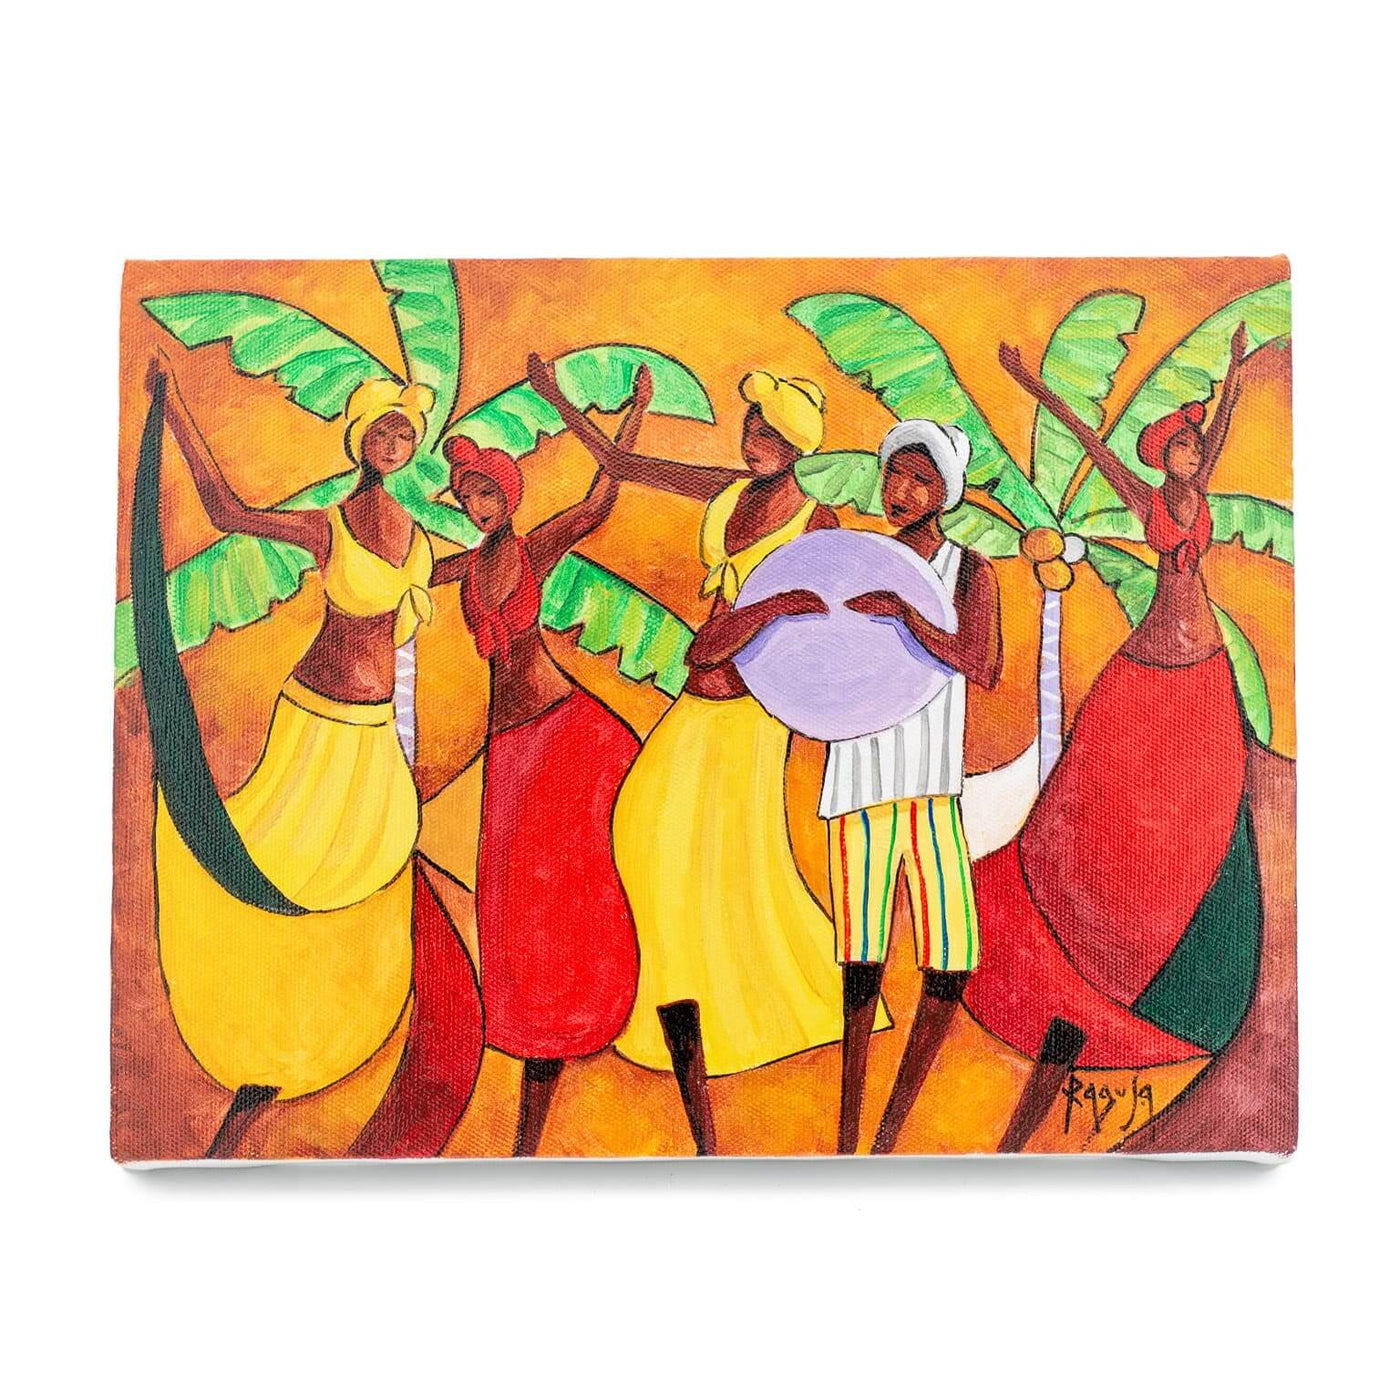 Mauritius-Authentic-HandMade-Painting-Pino Ragusa, "Le Sega"-DodoMarket